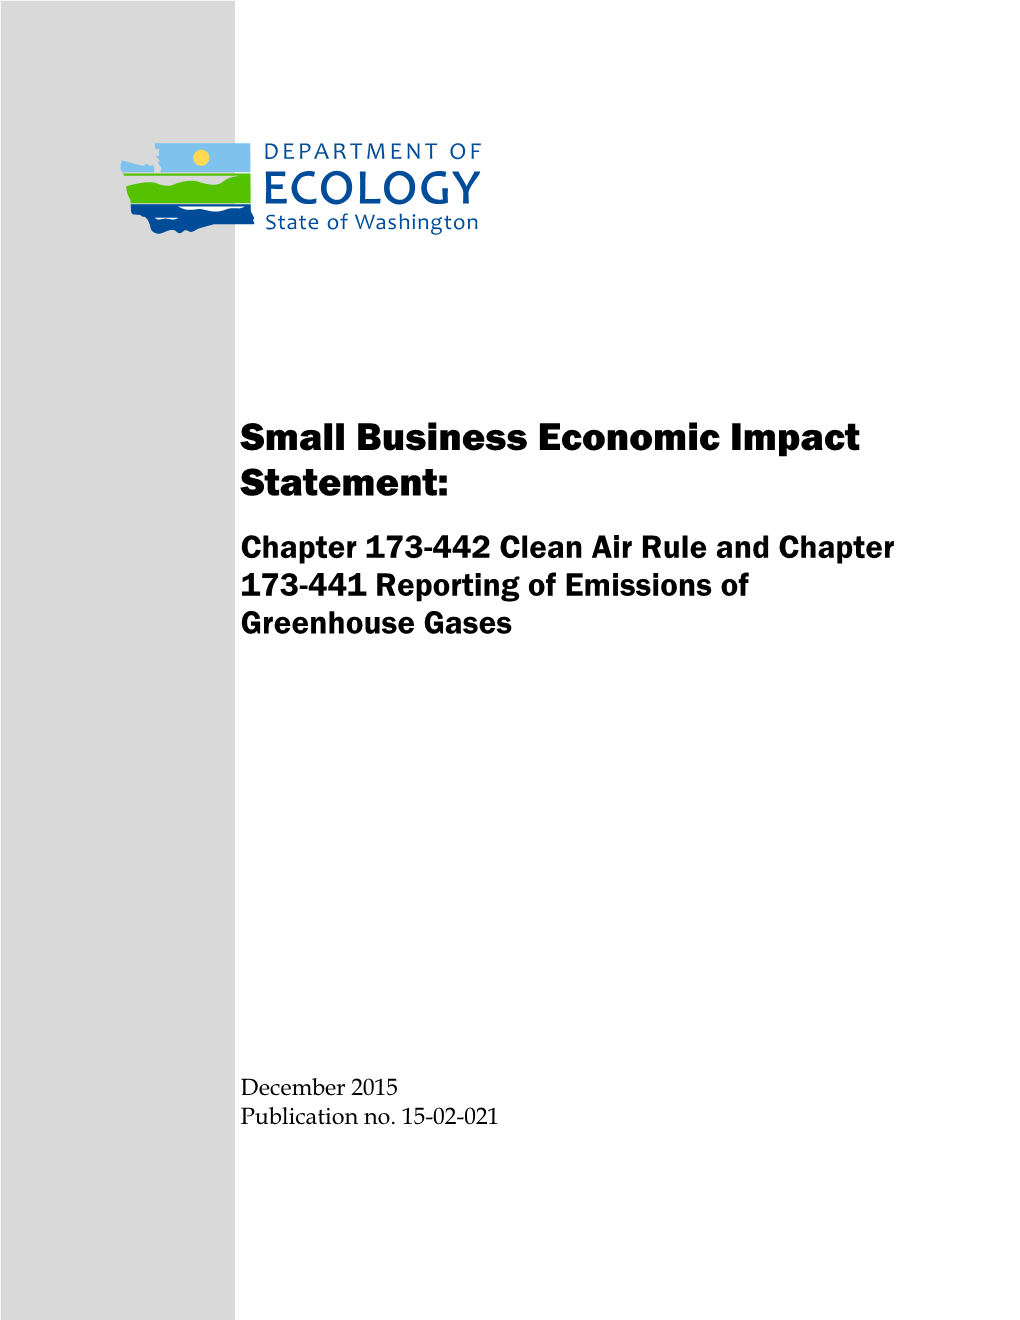 Small Business Economic Impact Statement